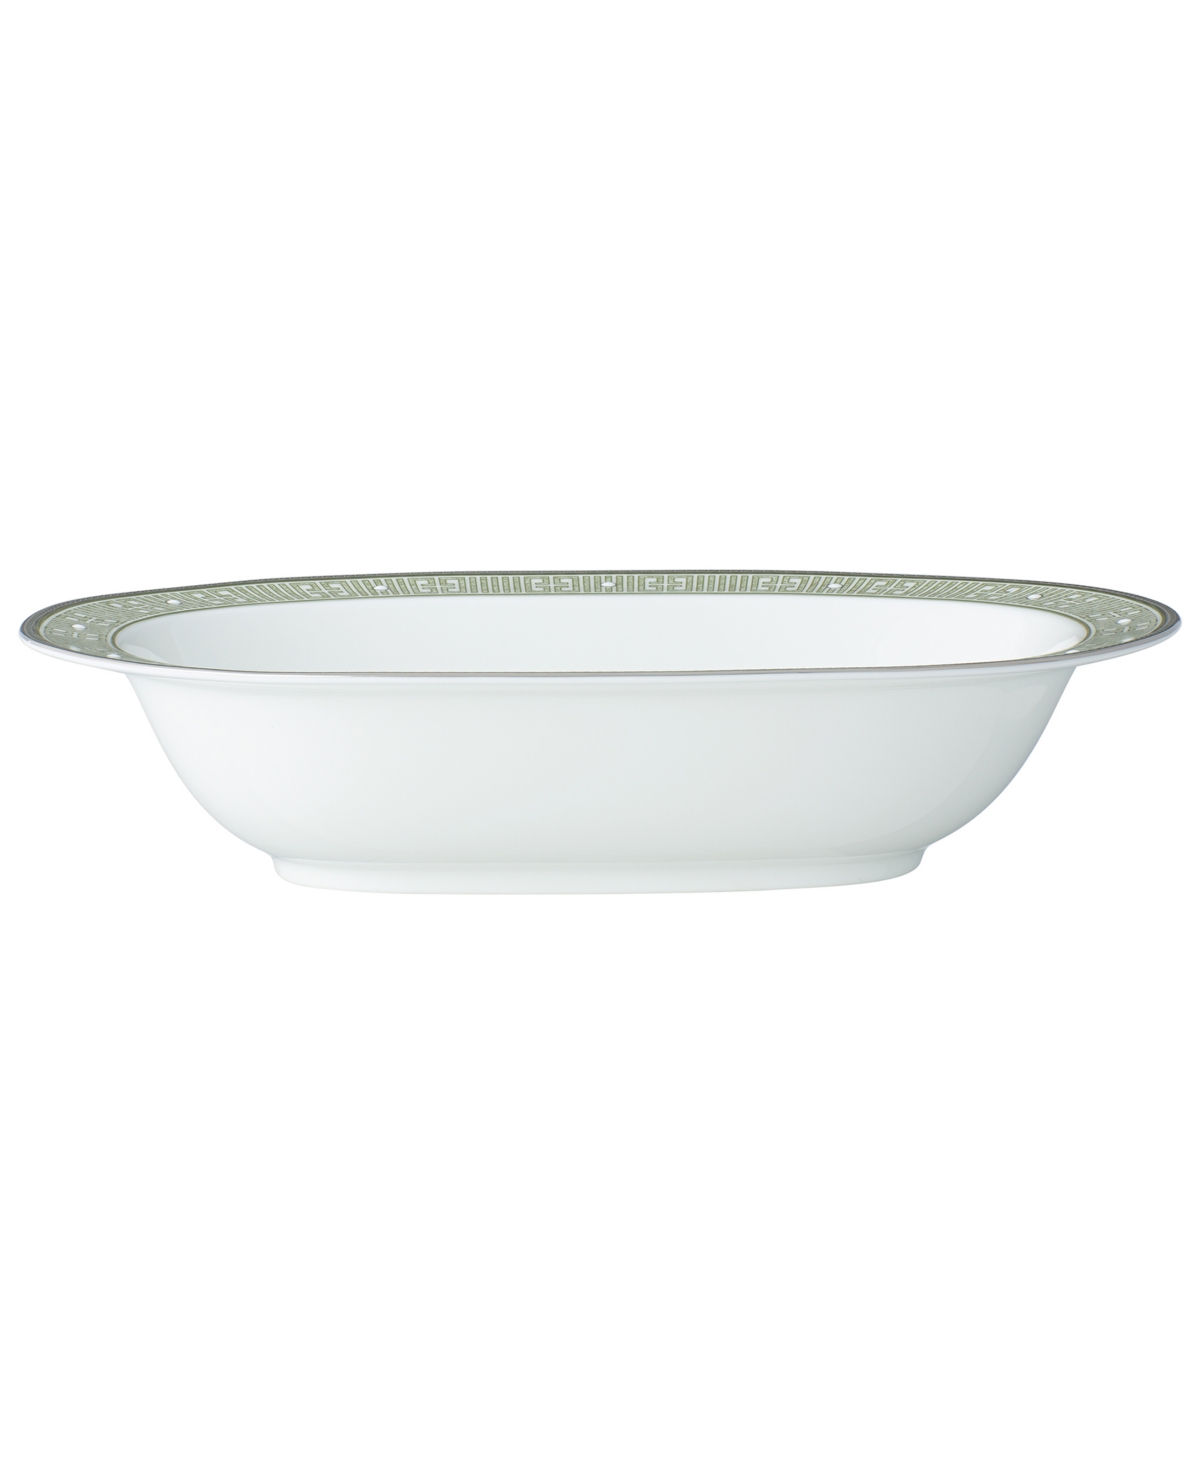 Noritake Infinity Oval Vegetable Bowl 24 oz In Green Platinum